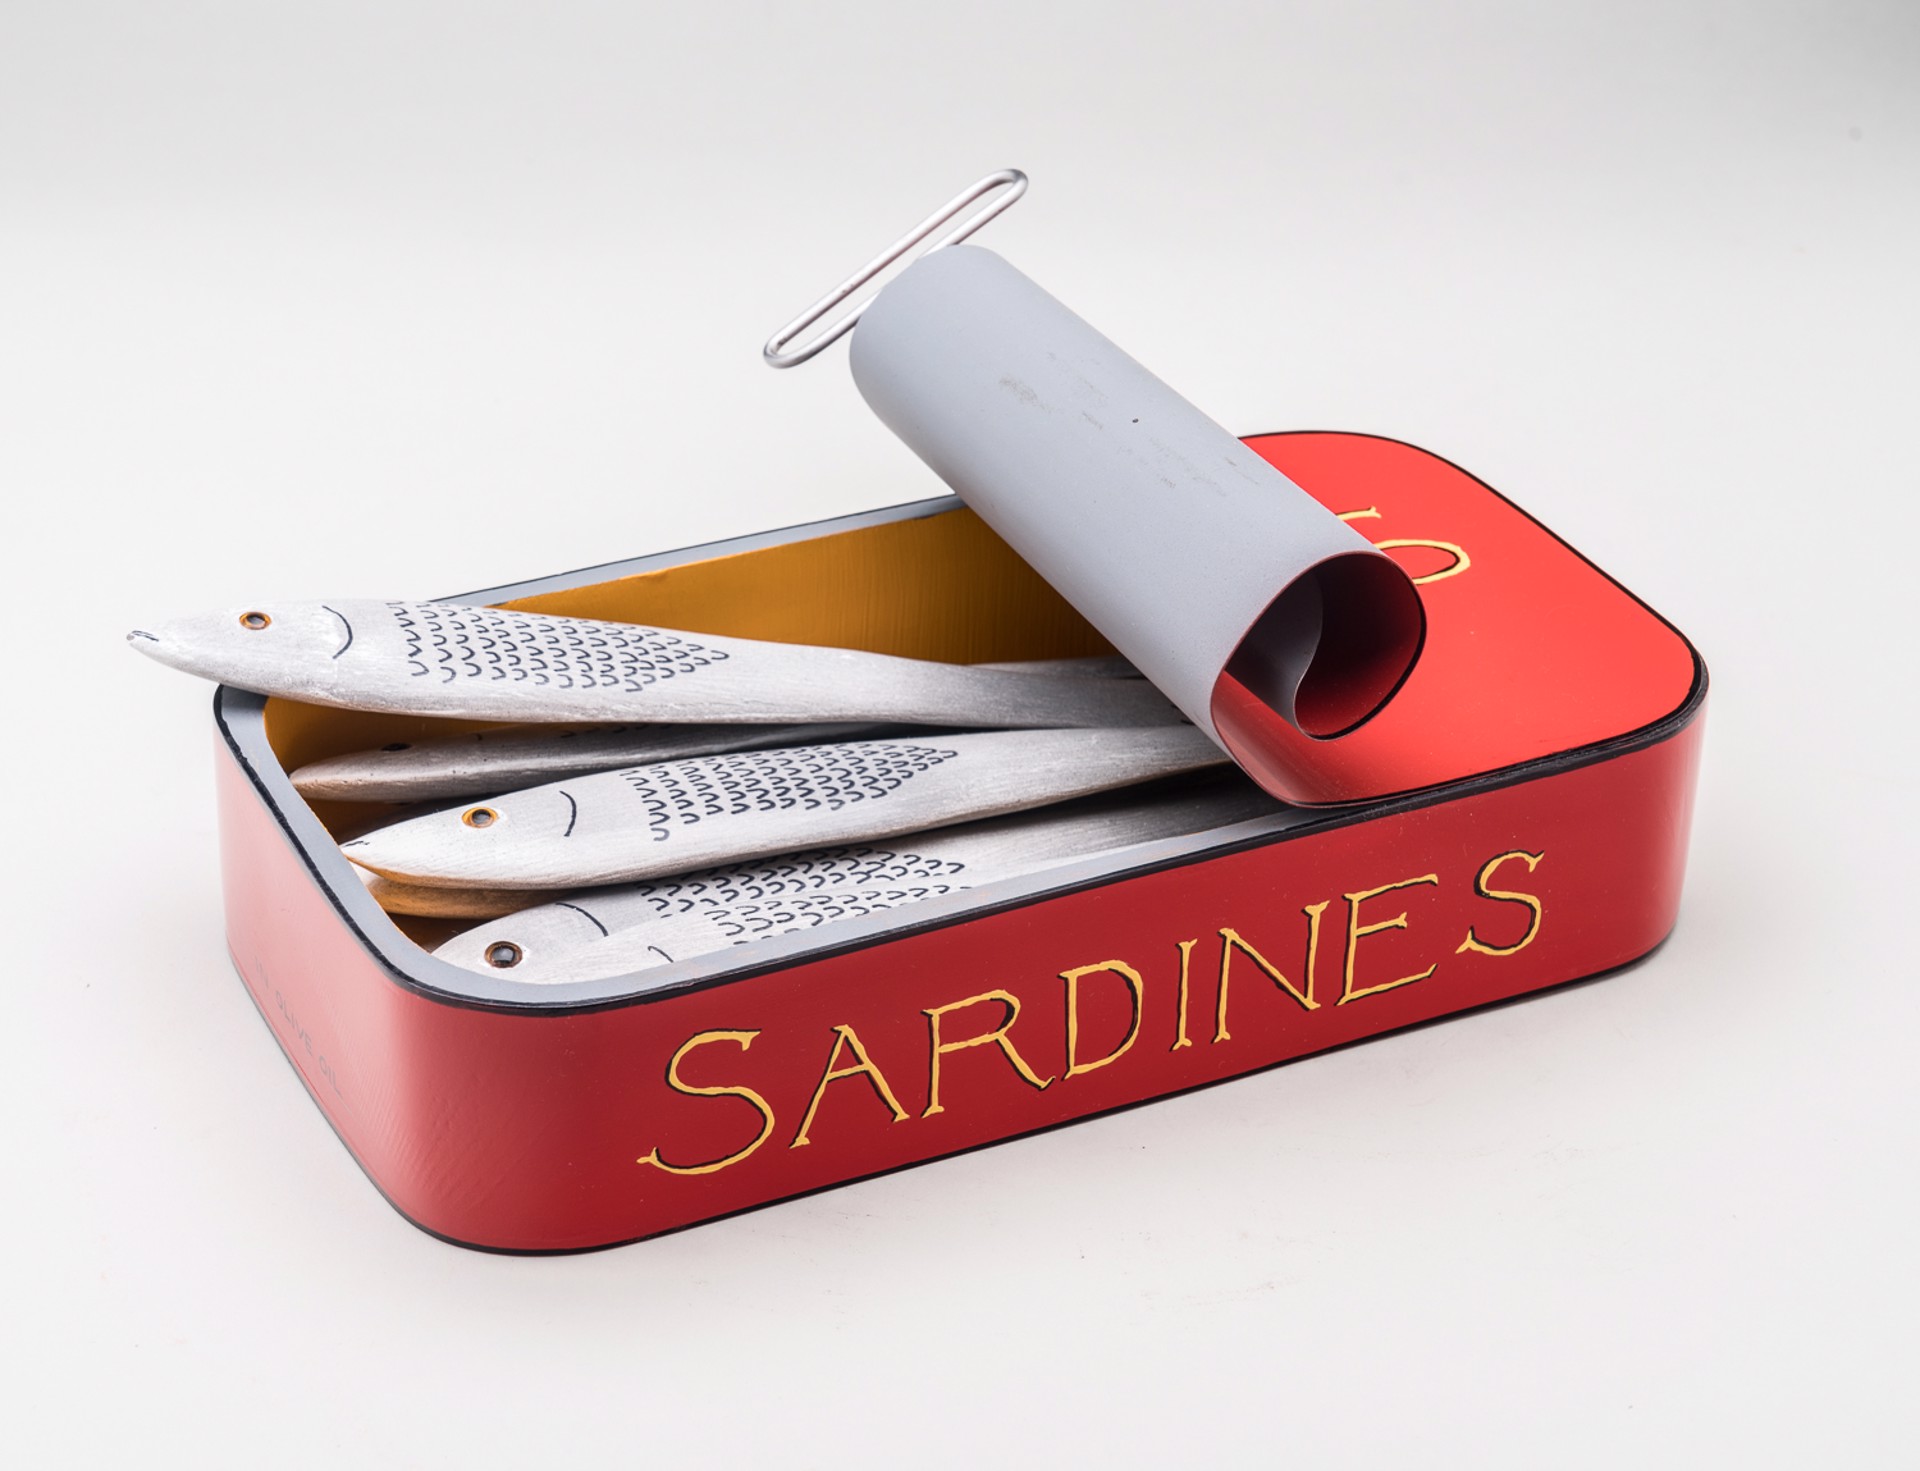 SARDINES by Max Tannahill